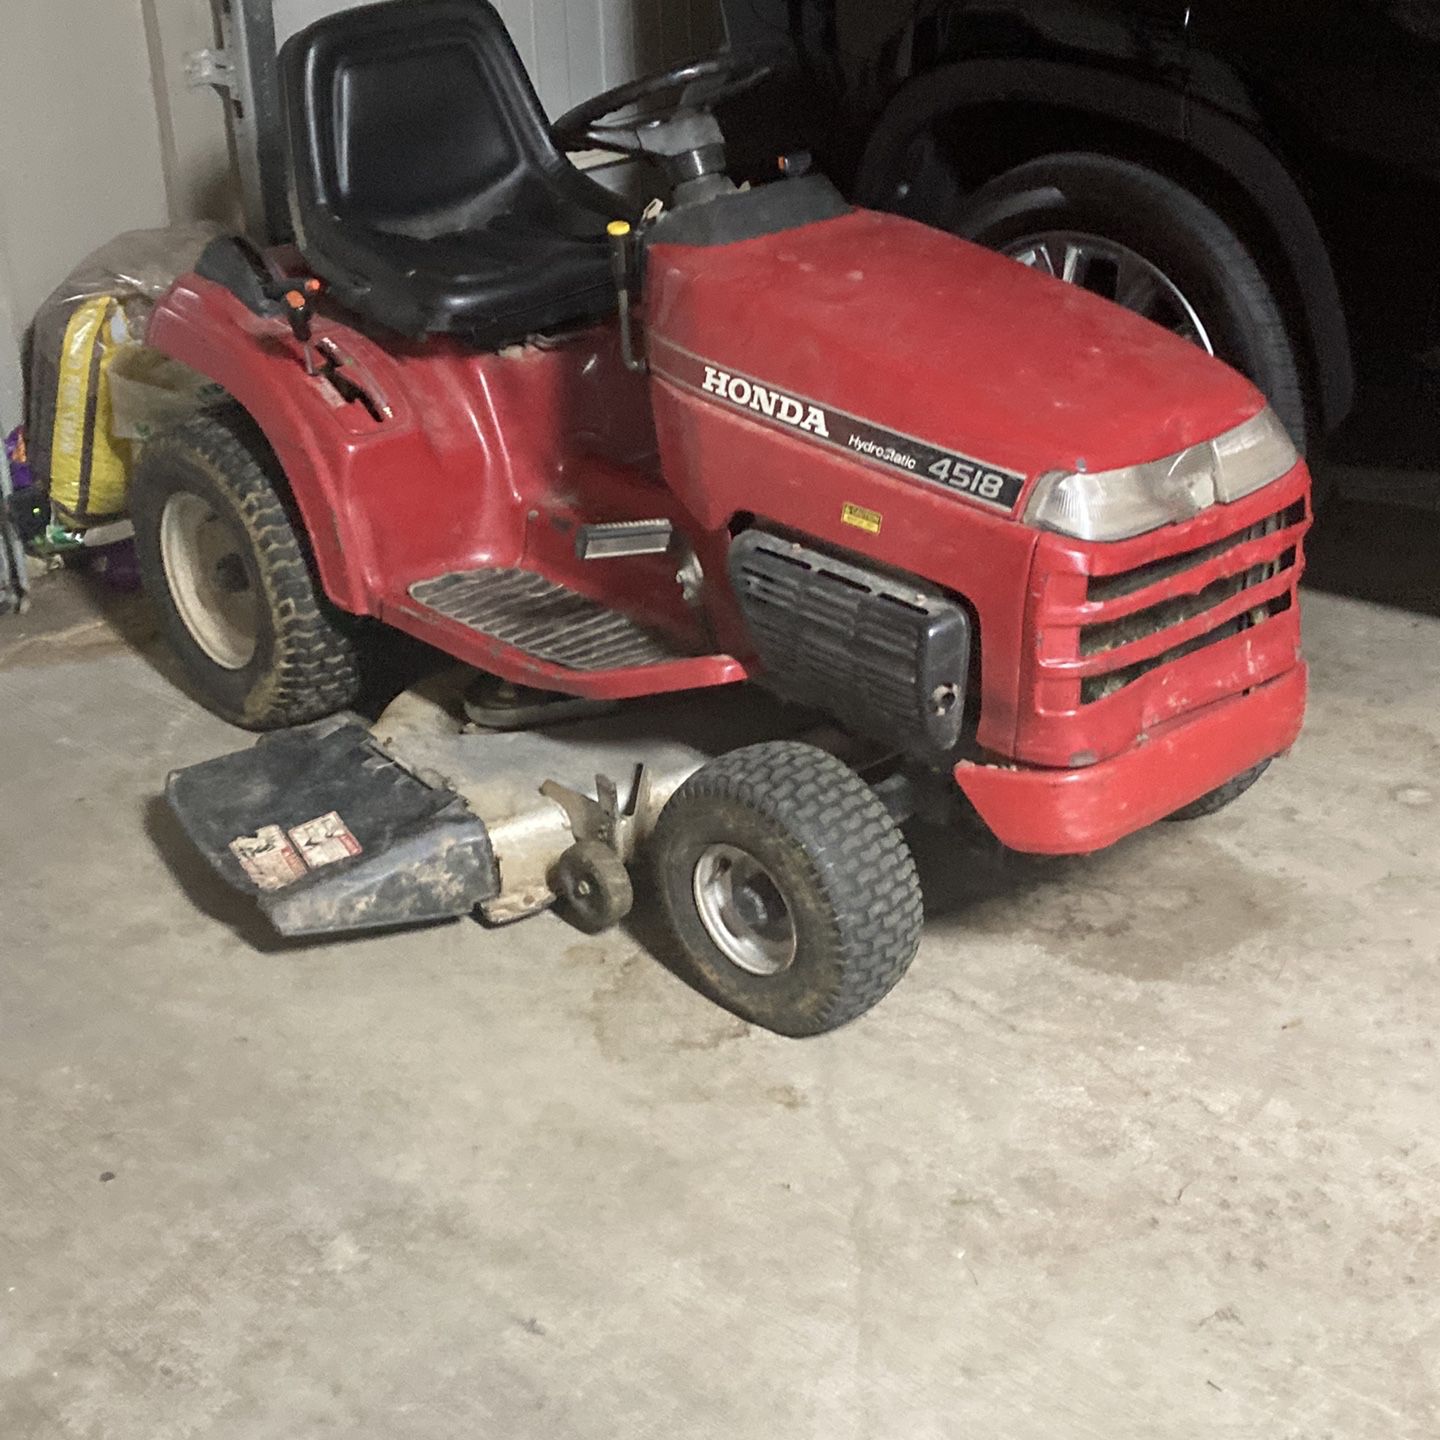 Honda 4518 Lawn Tractor. - 46 “ Deck